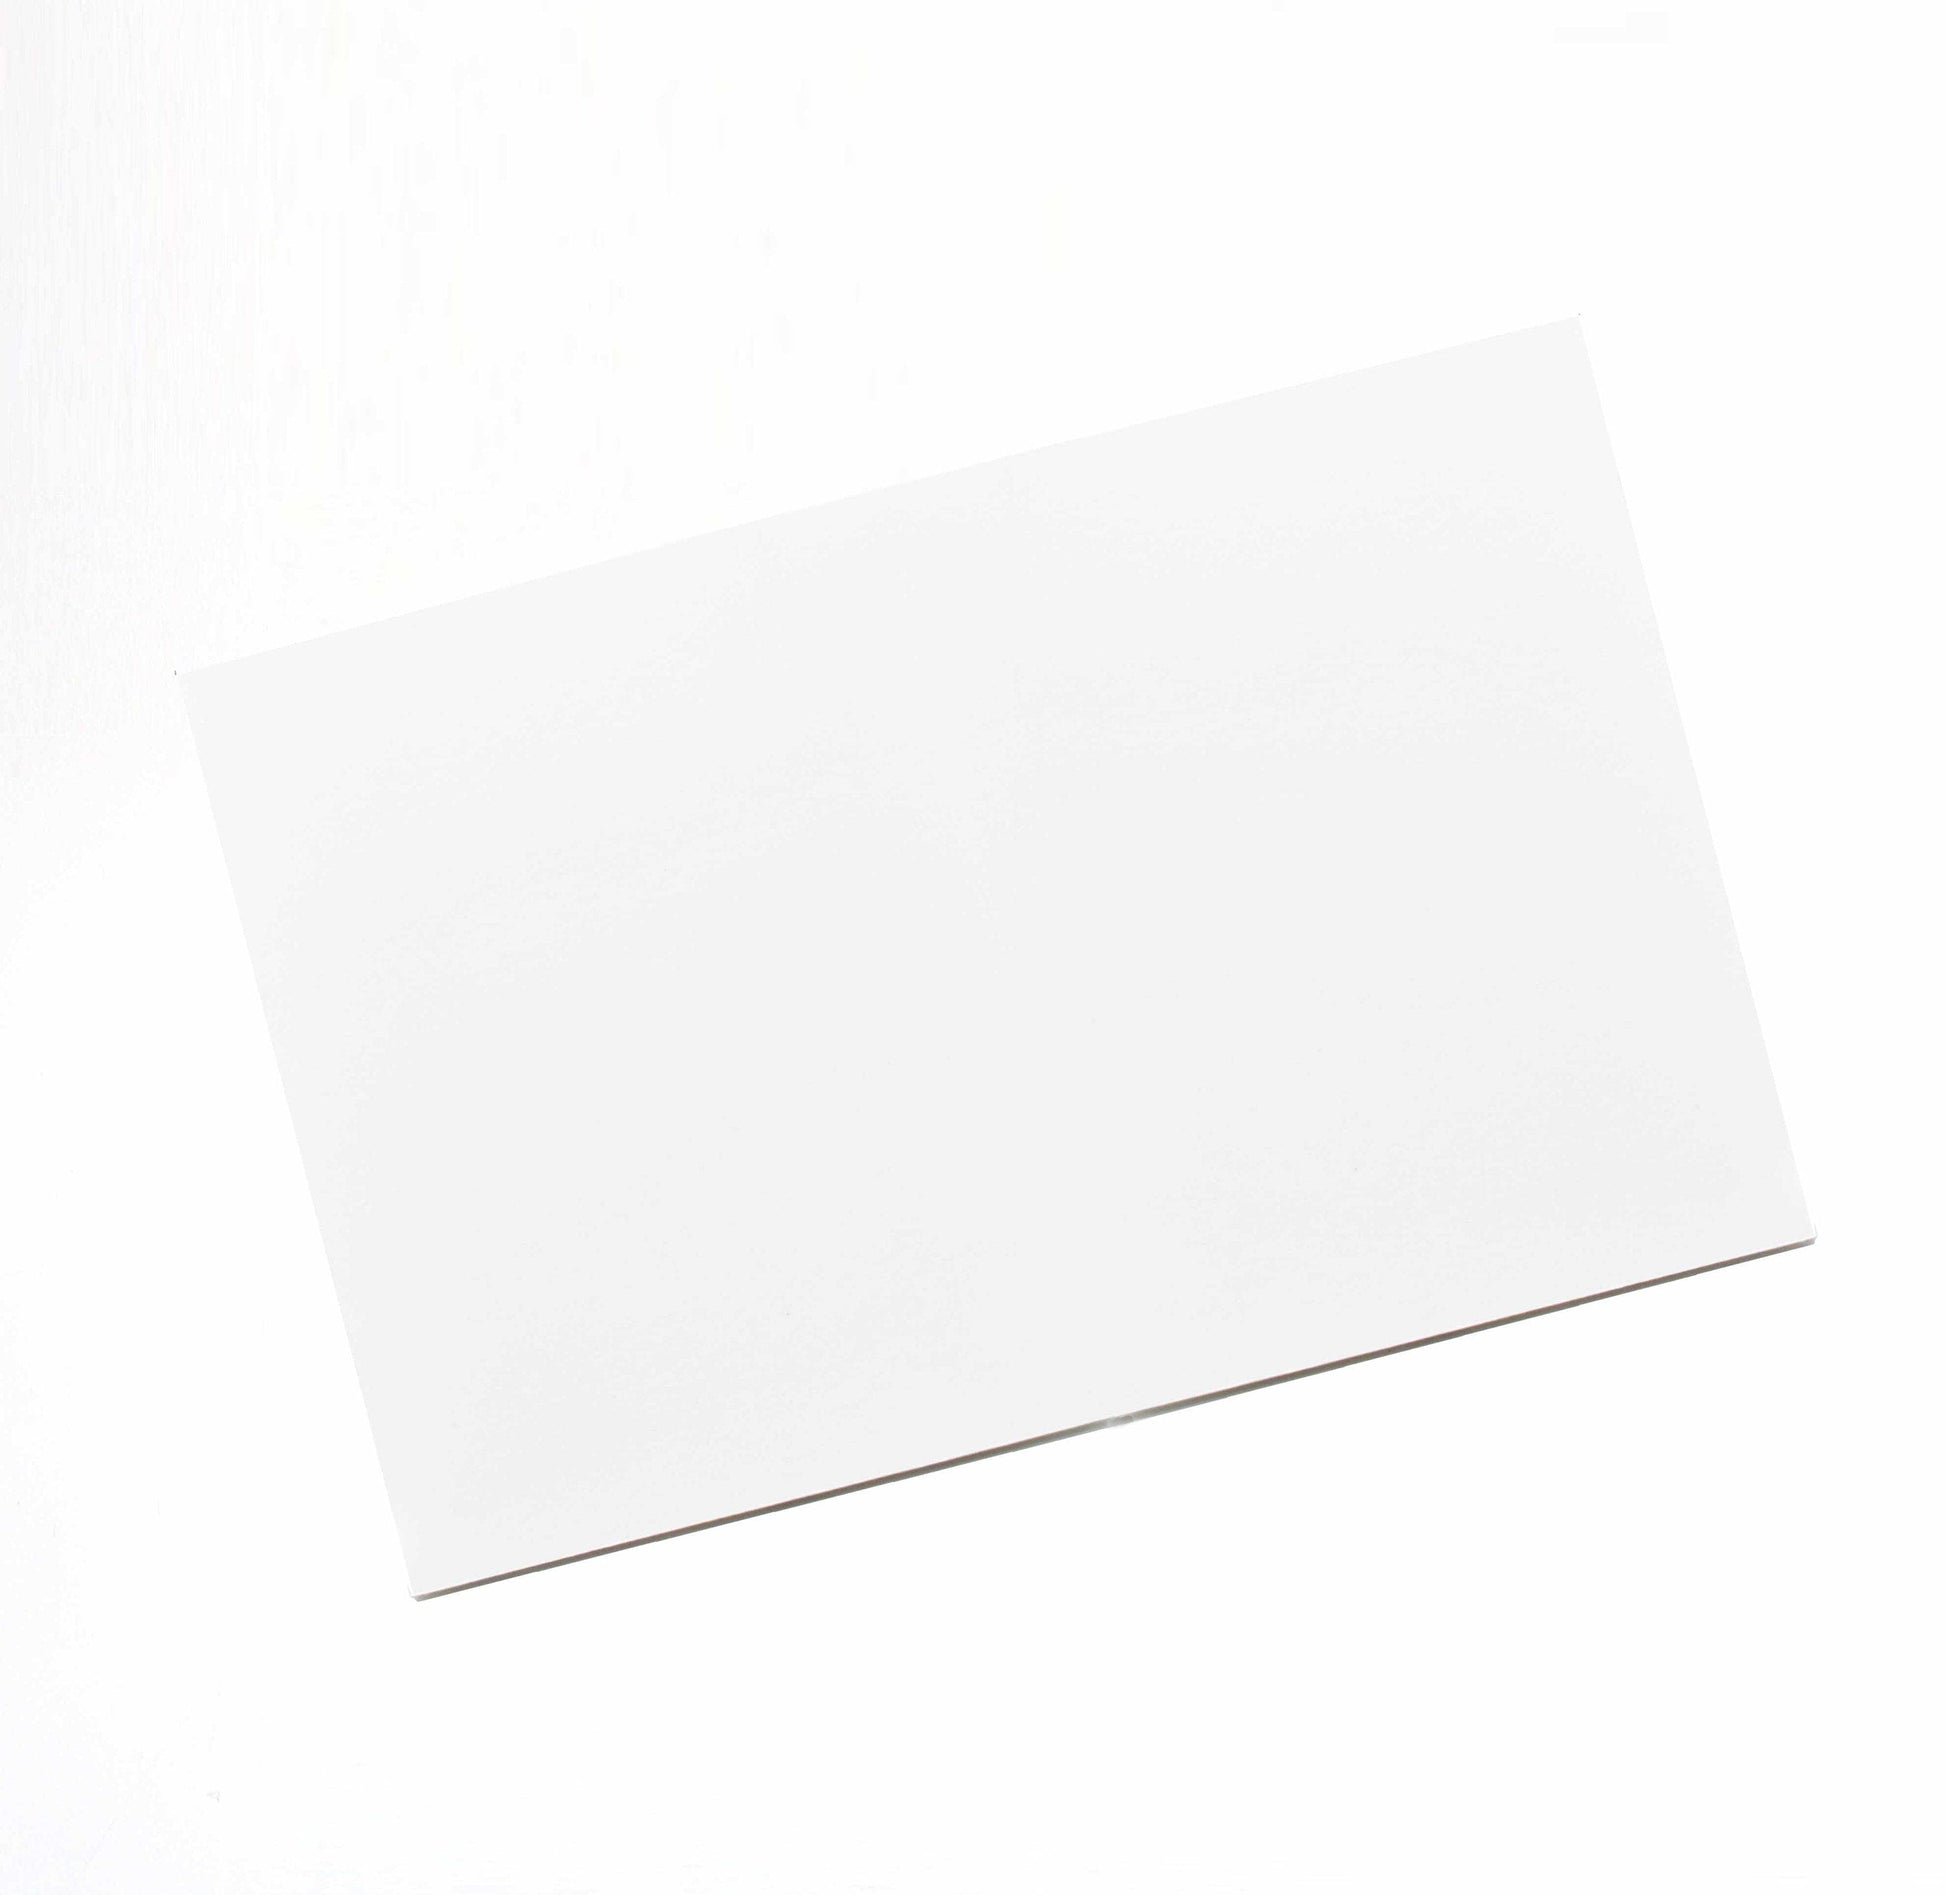 PinkPolish Design Note Cards "Unfurled" Handmade Notecard